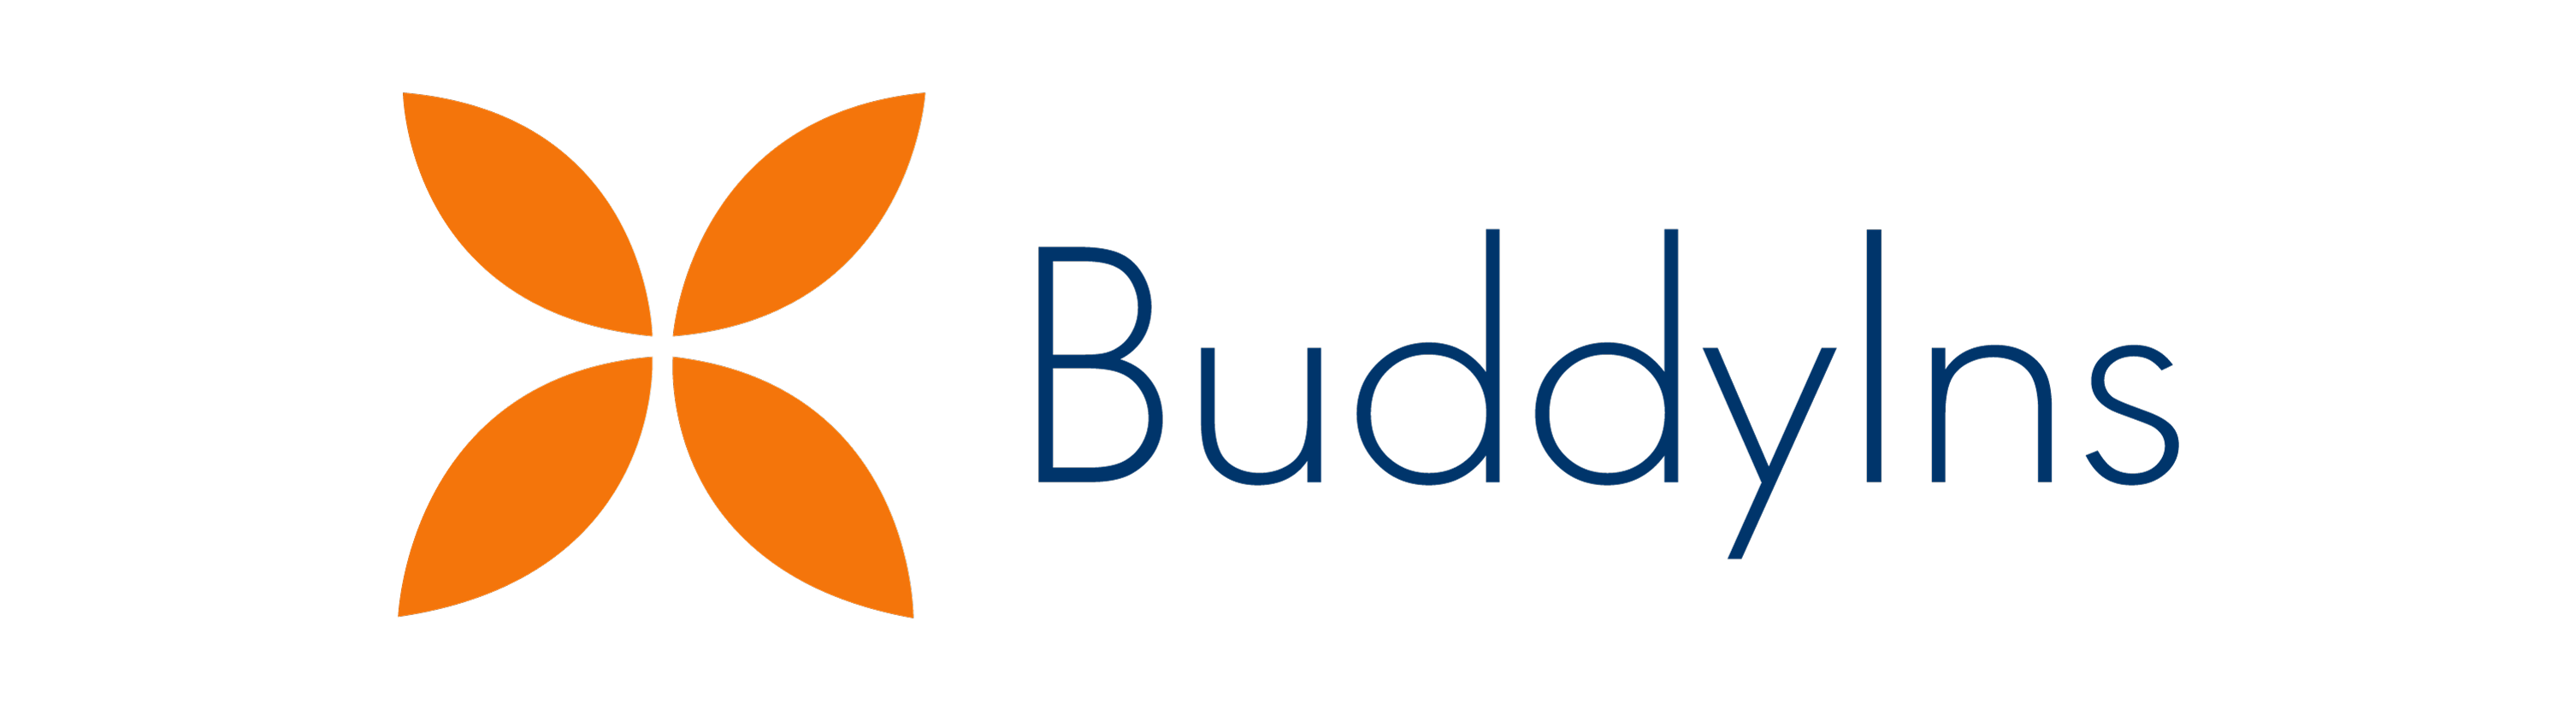 https://www.buddyins.com/wp-content/uploads/2019/06/cropped-Logo_Buddylns_FINAL.png